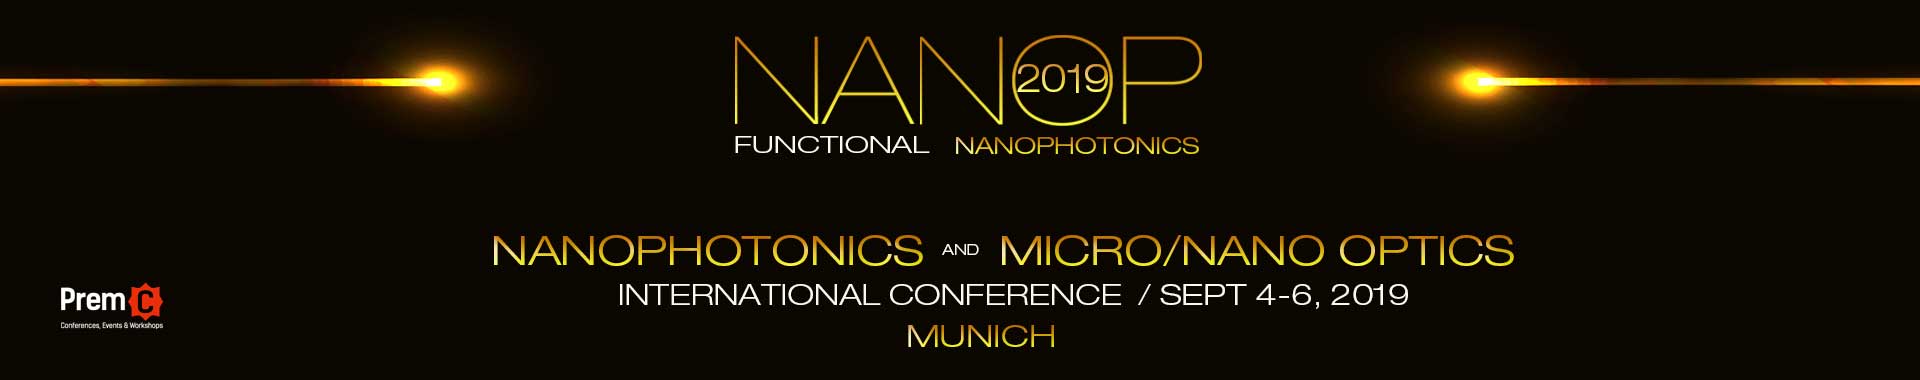 Nanophotonics and Micro/Nano Optics International Conference 2018 banner